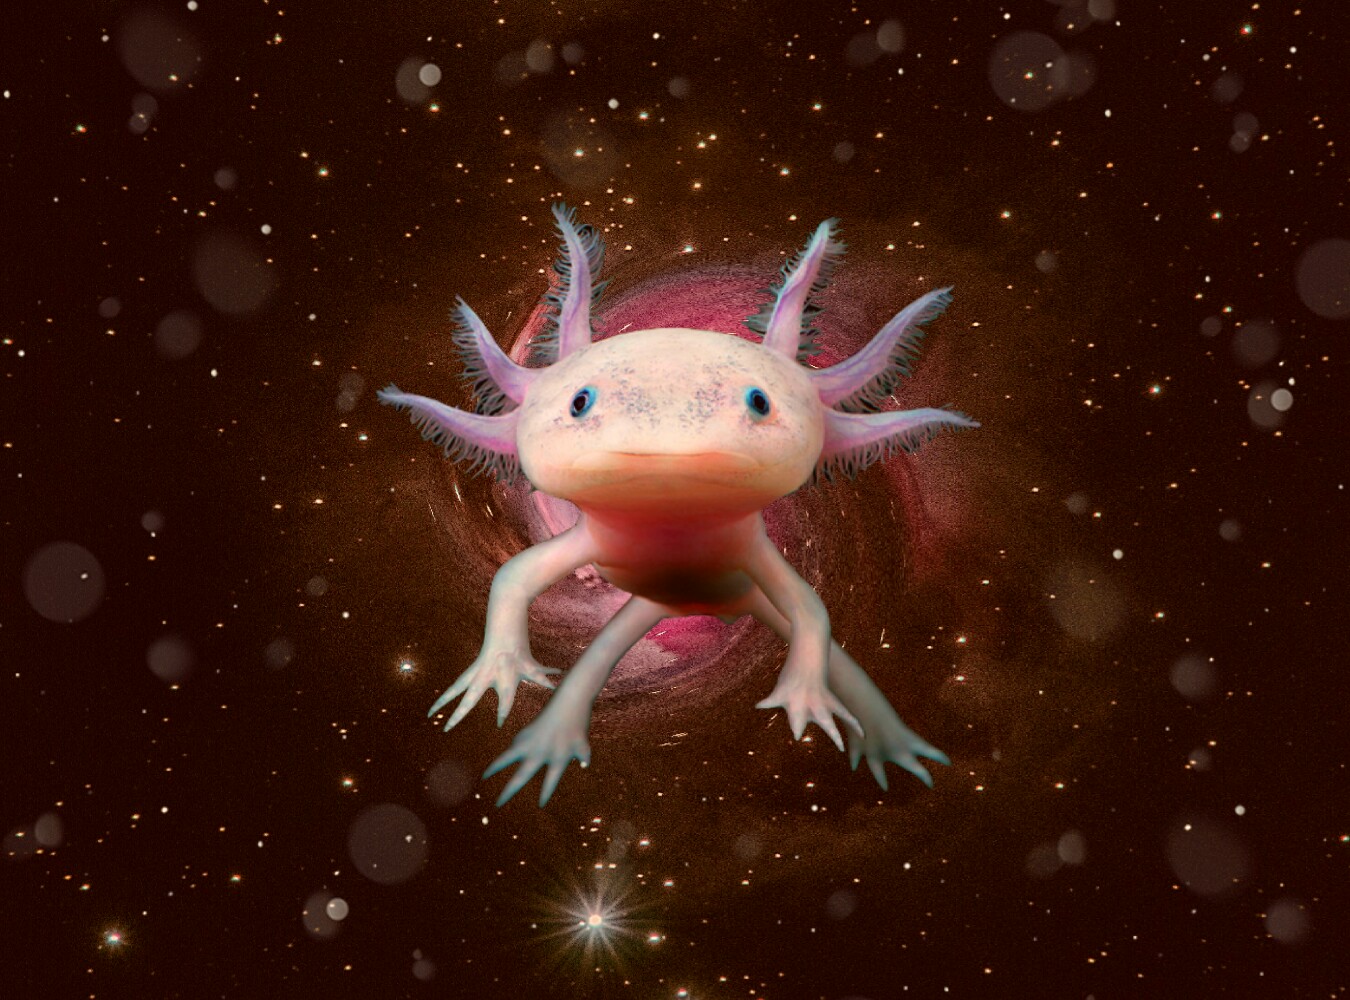 freetoedit axolotl deity prophecy image by @glitchartiste